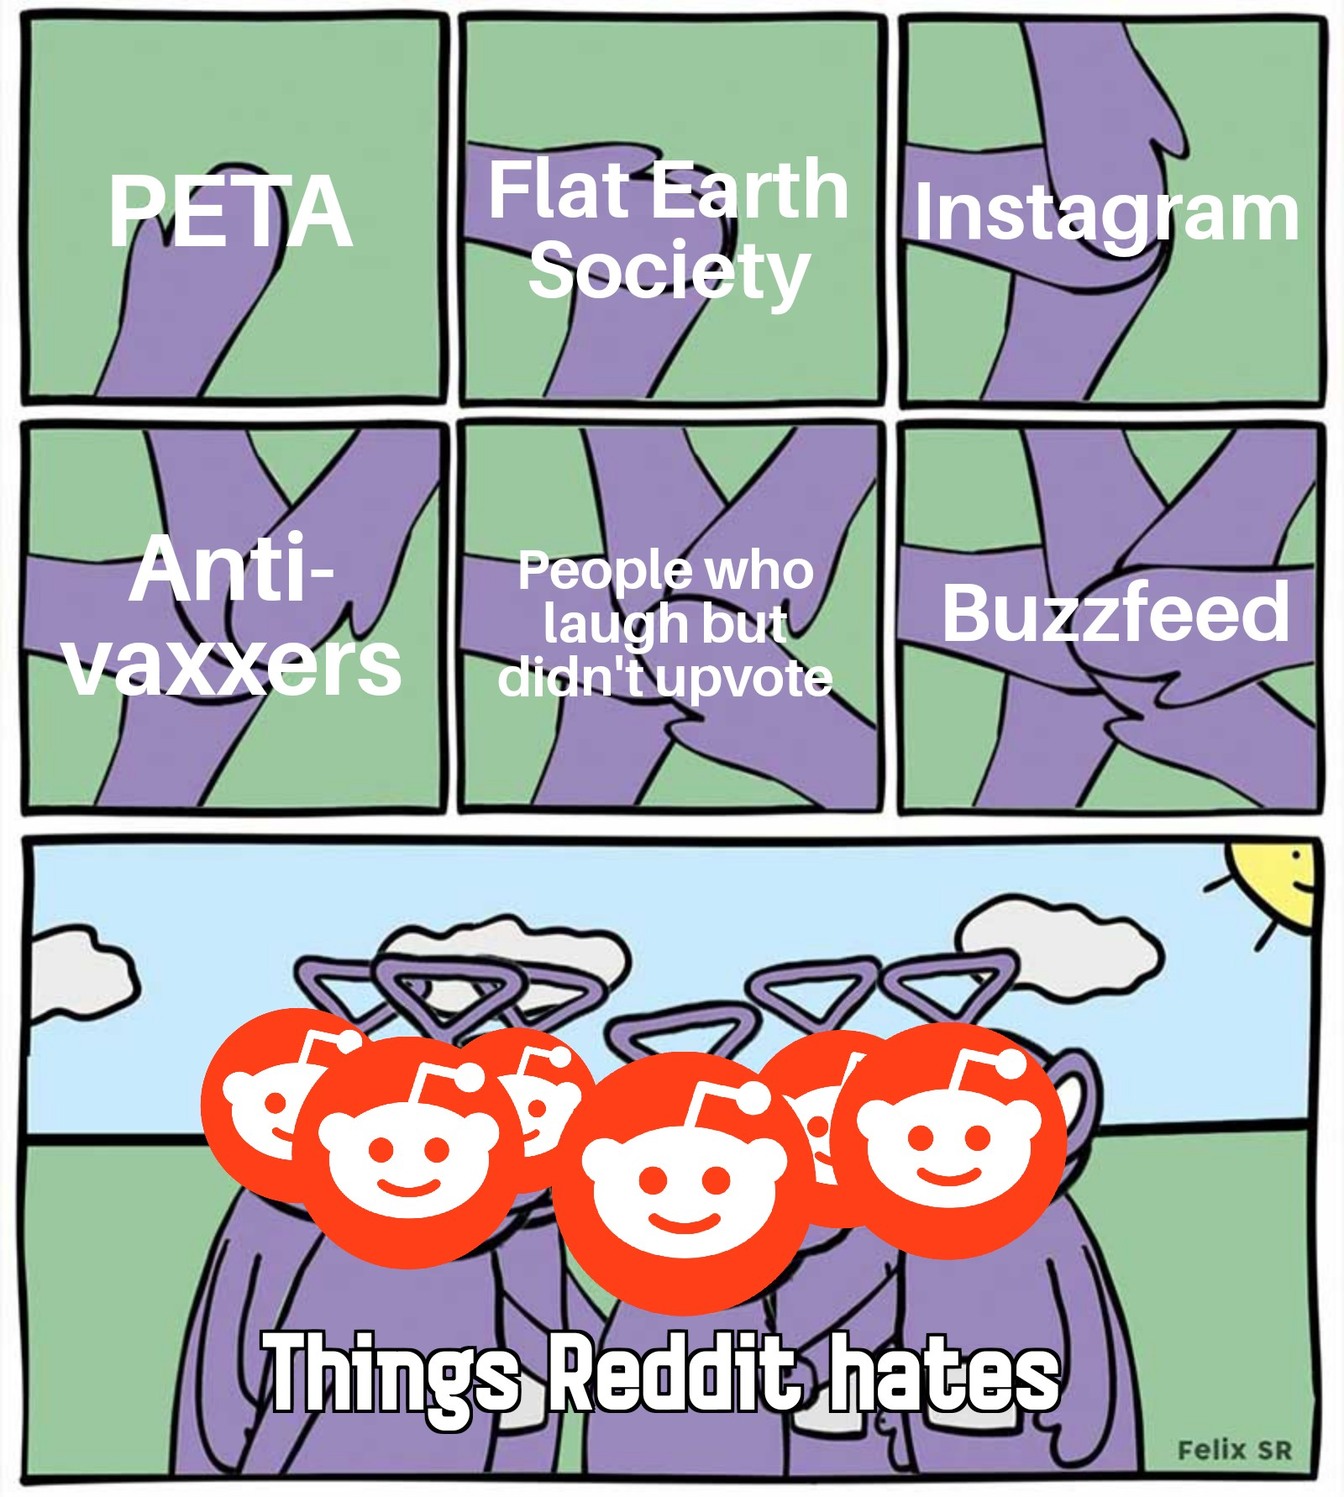 Reddit - meme